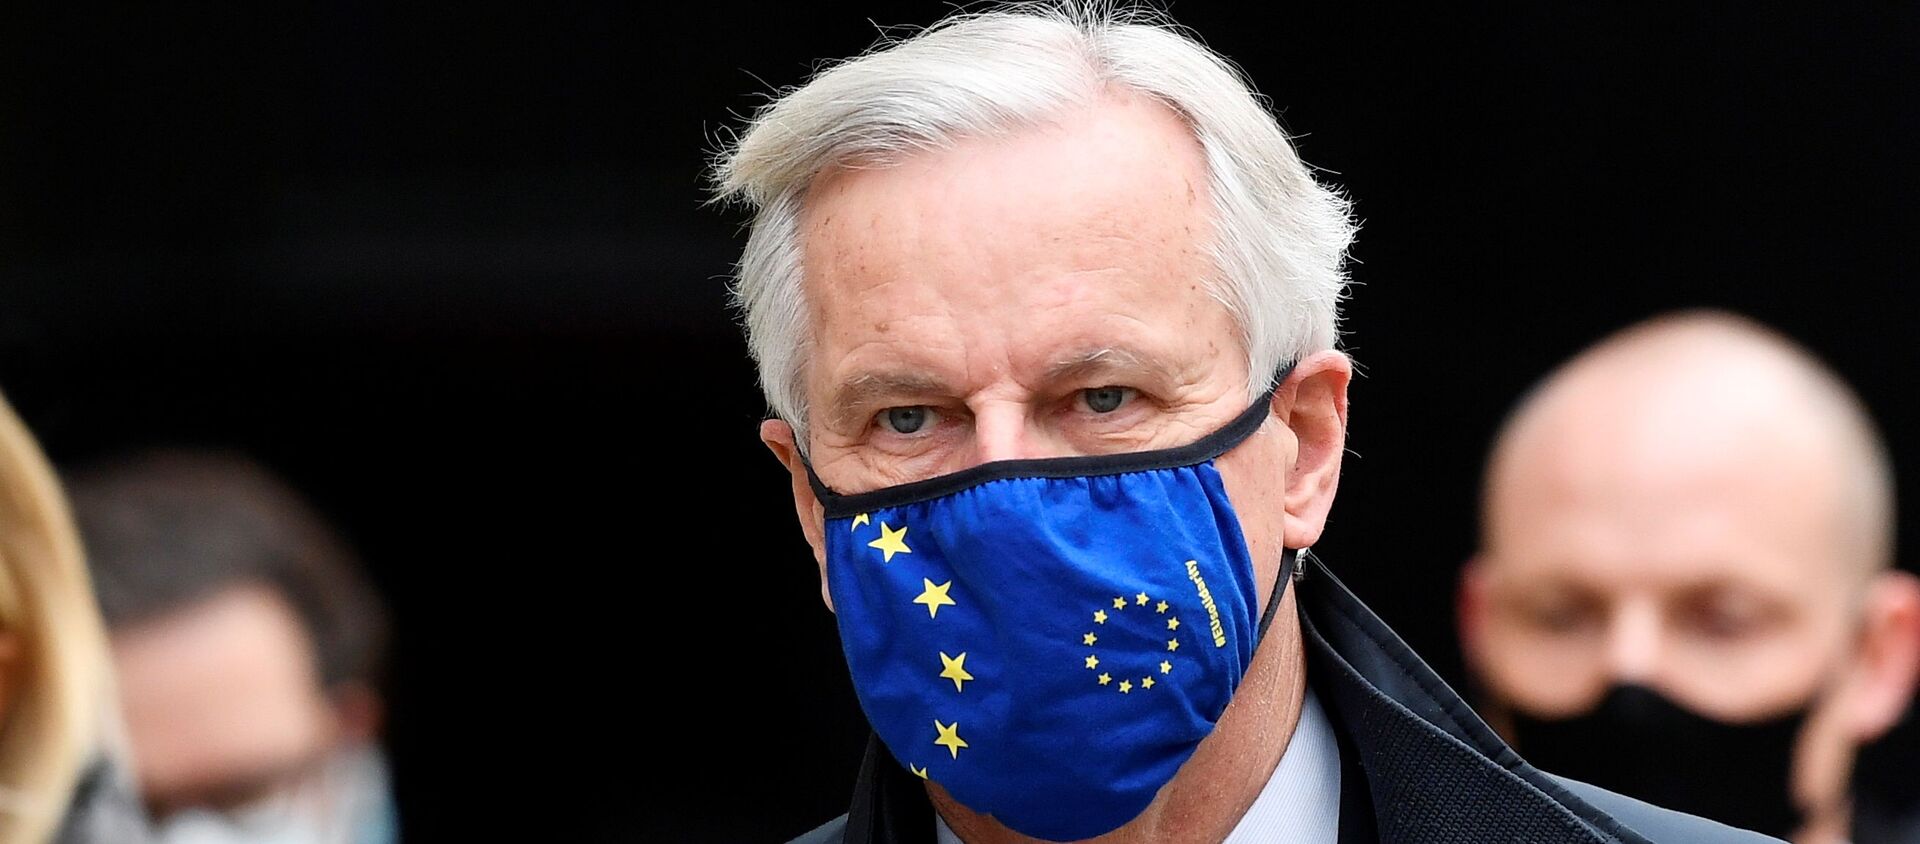 European Union's chief Brexit negotiator Michel Barnier wearing a face mask walks to Brexit trade negotiations in London, Britain, November 11, 2020 - Sputnik International, 1920, 28.11.2020